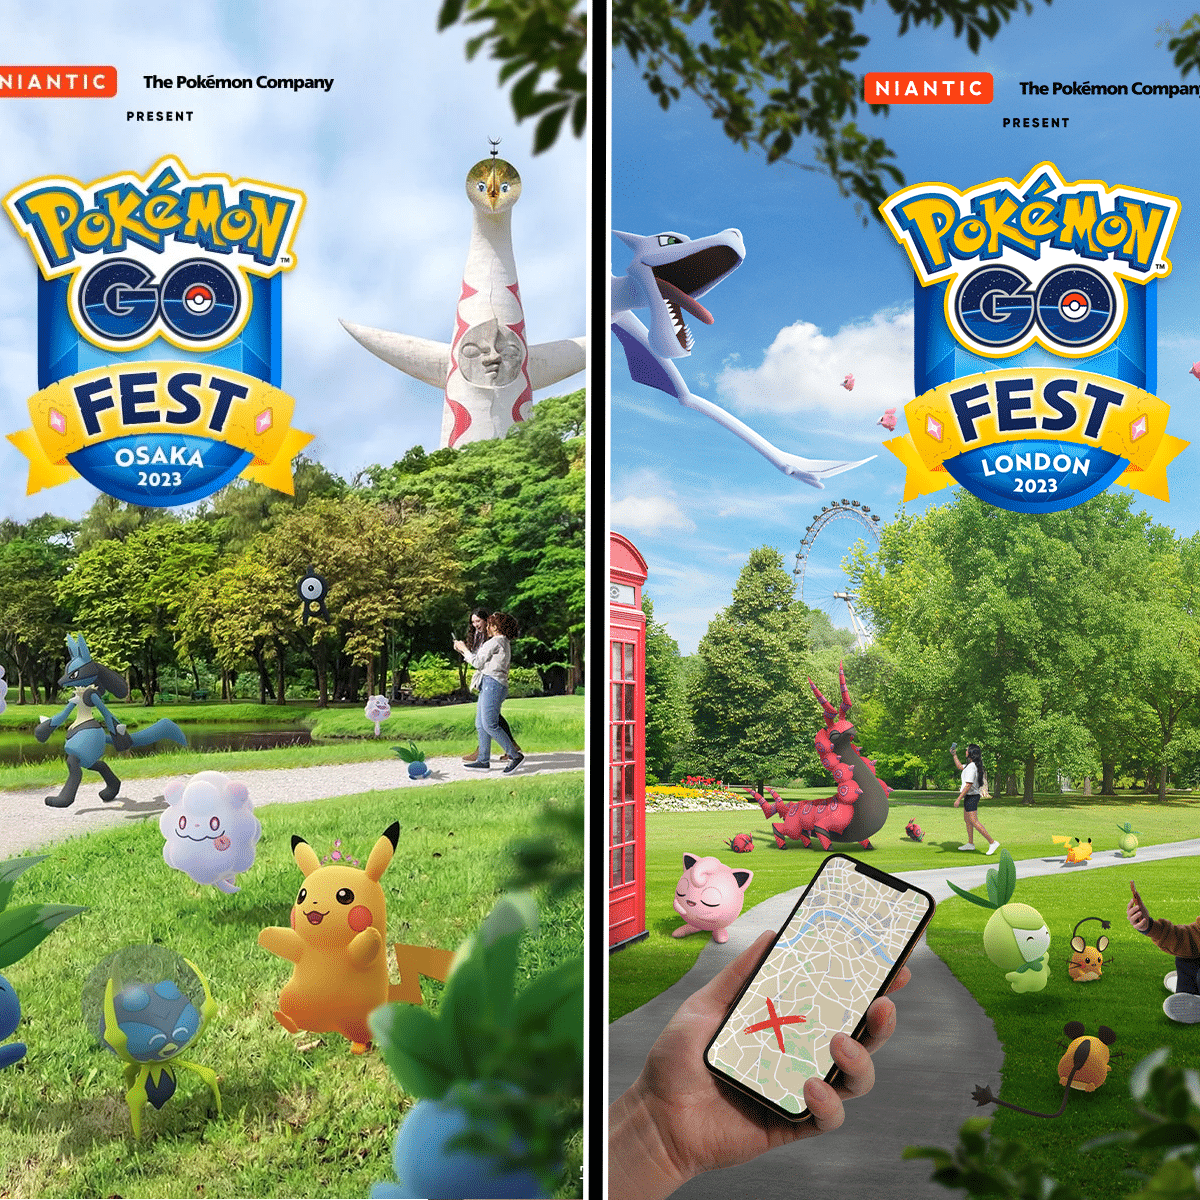 Pokemon Go Fest: Finale Event - Ultra Beasts, Habitat Schedule and